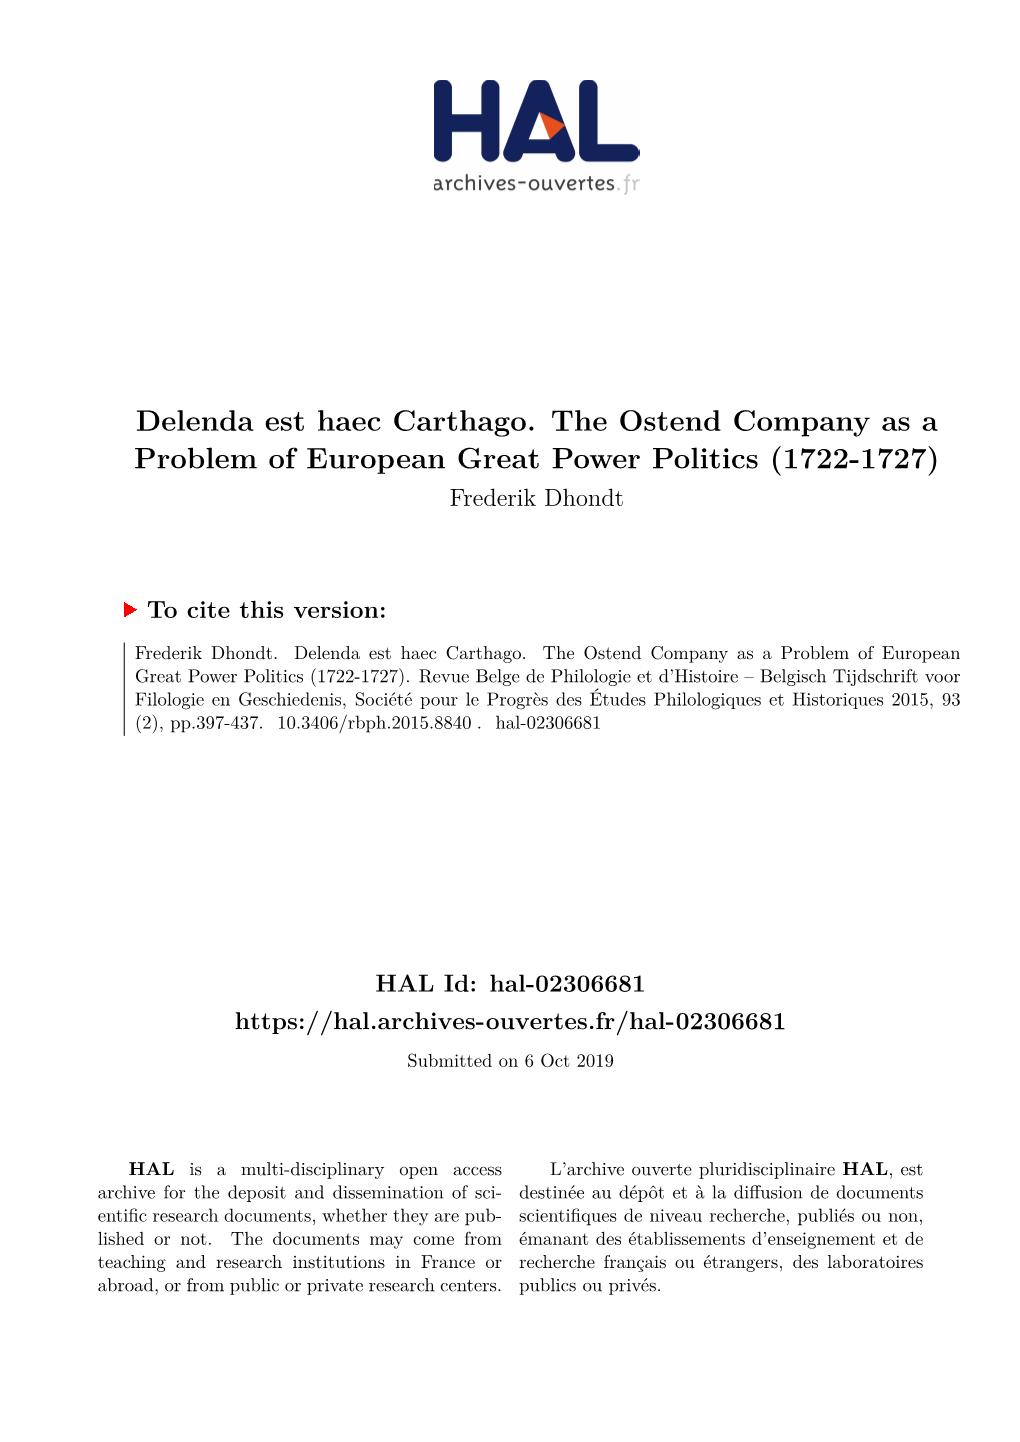 Delenda Est Haec Carthago. the Ostend Company As a Problem of European Great Power Politics (1722-1727) Frederik Dhondt